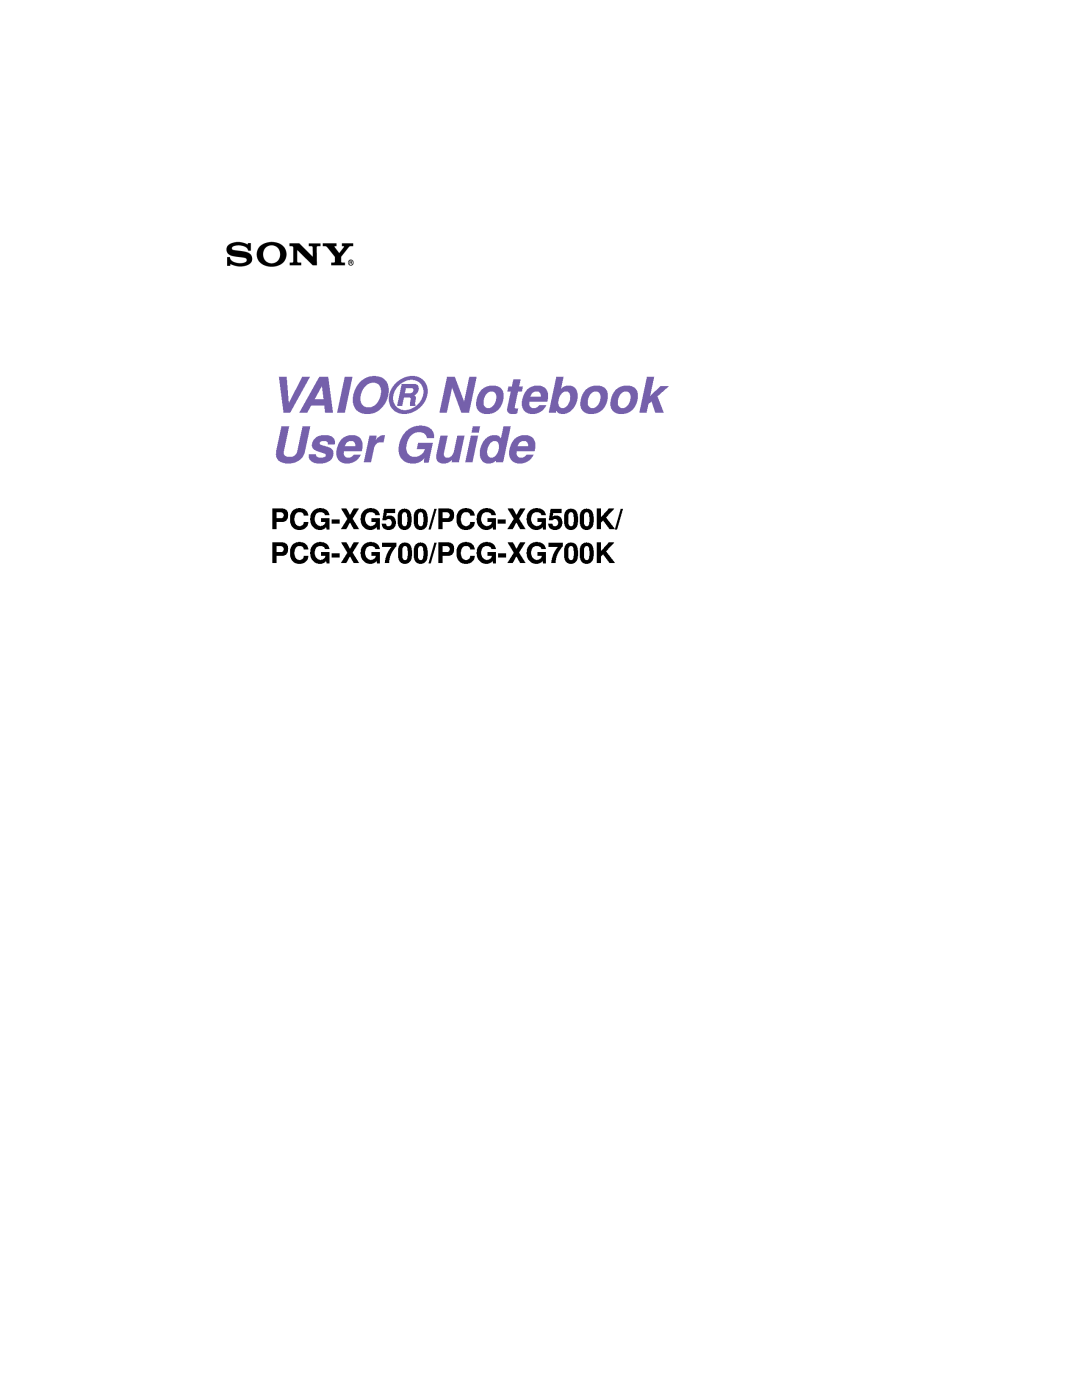 Sony manual VAIO Notebook User Guide, PCG-XG500/PCG-XG500K/ PCG-XG700/PCG-XG700K 